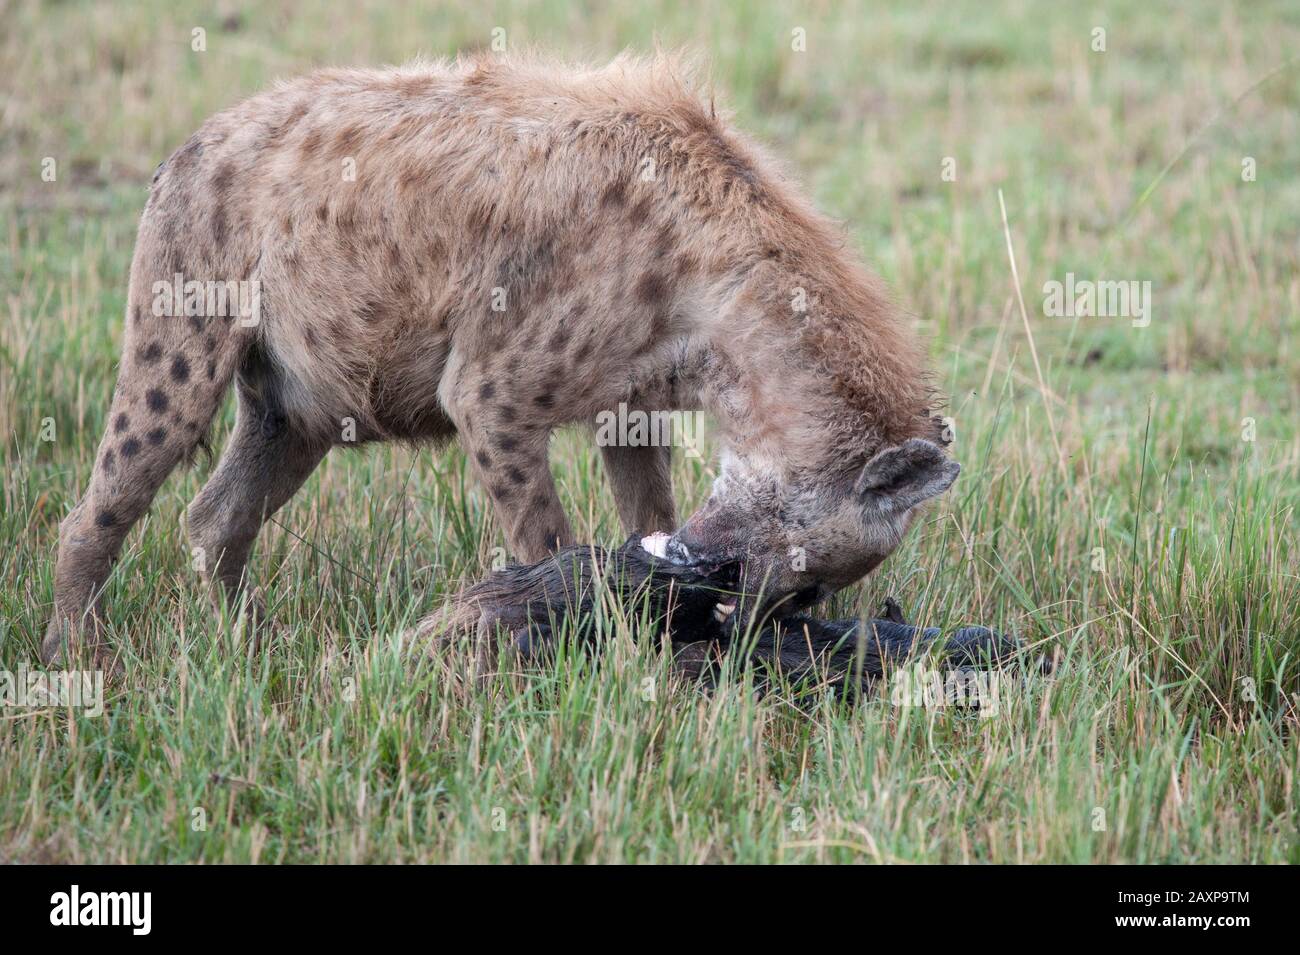 Avvistato Hyena nutrimento su un teschio di un'tana nelle praterie del Conservatorio Olare Motorogi, Kenya, Africa. Foto Stock